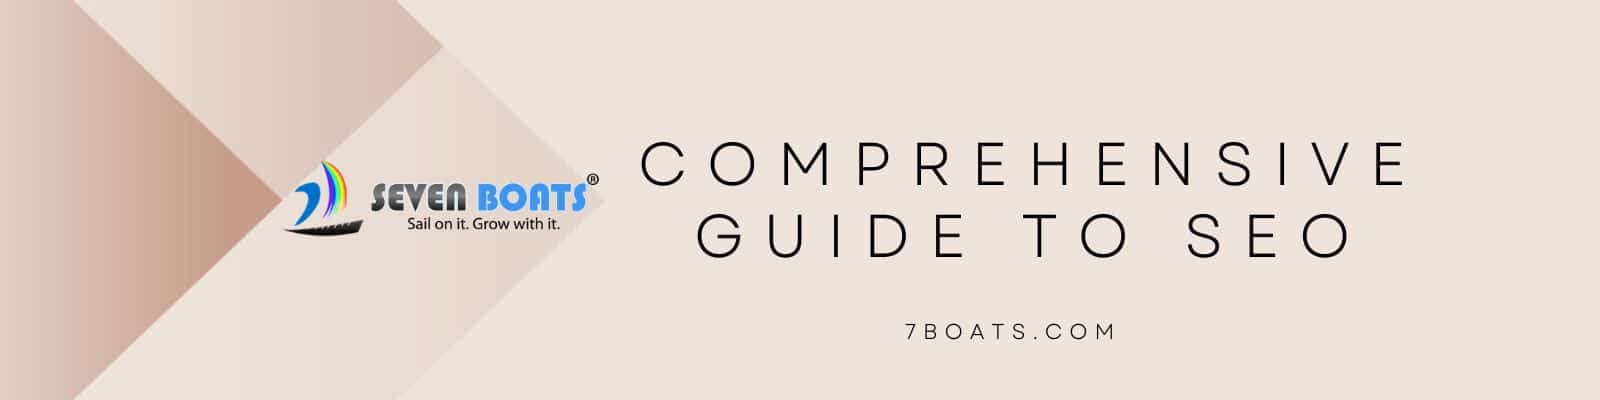 comprehensive guide to seo